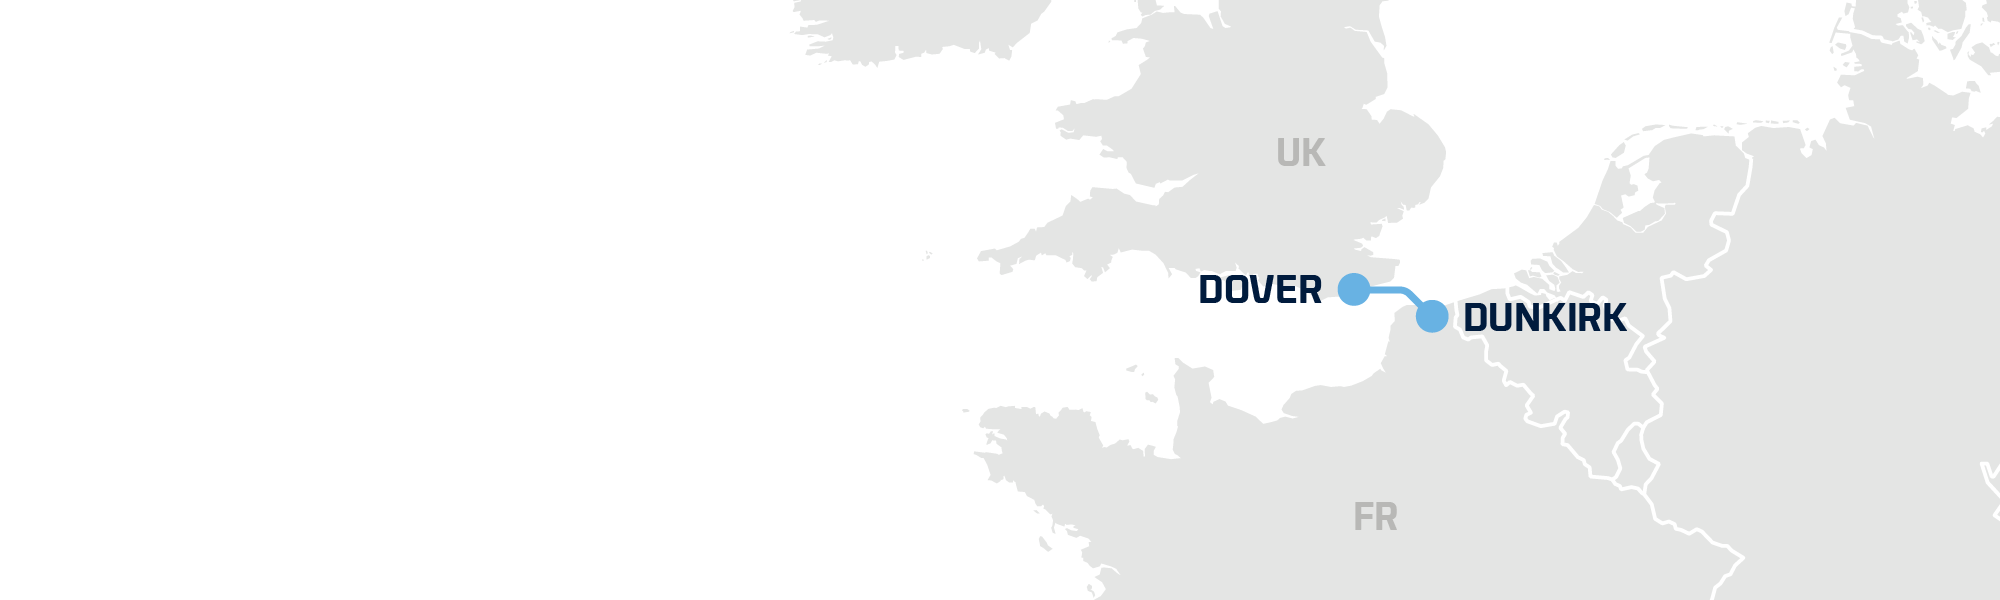 Dover-Dunkirk hero